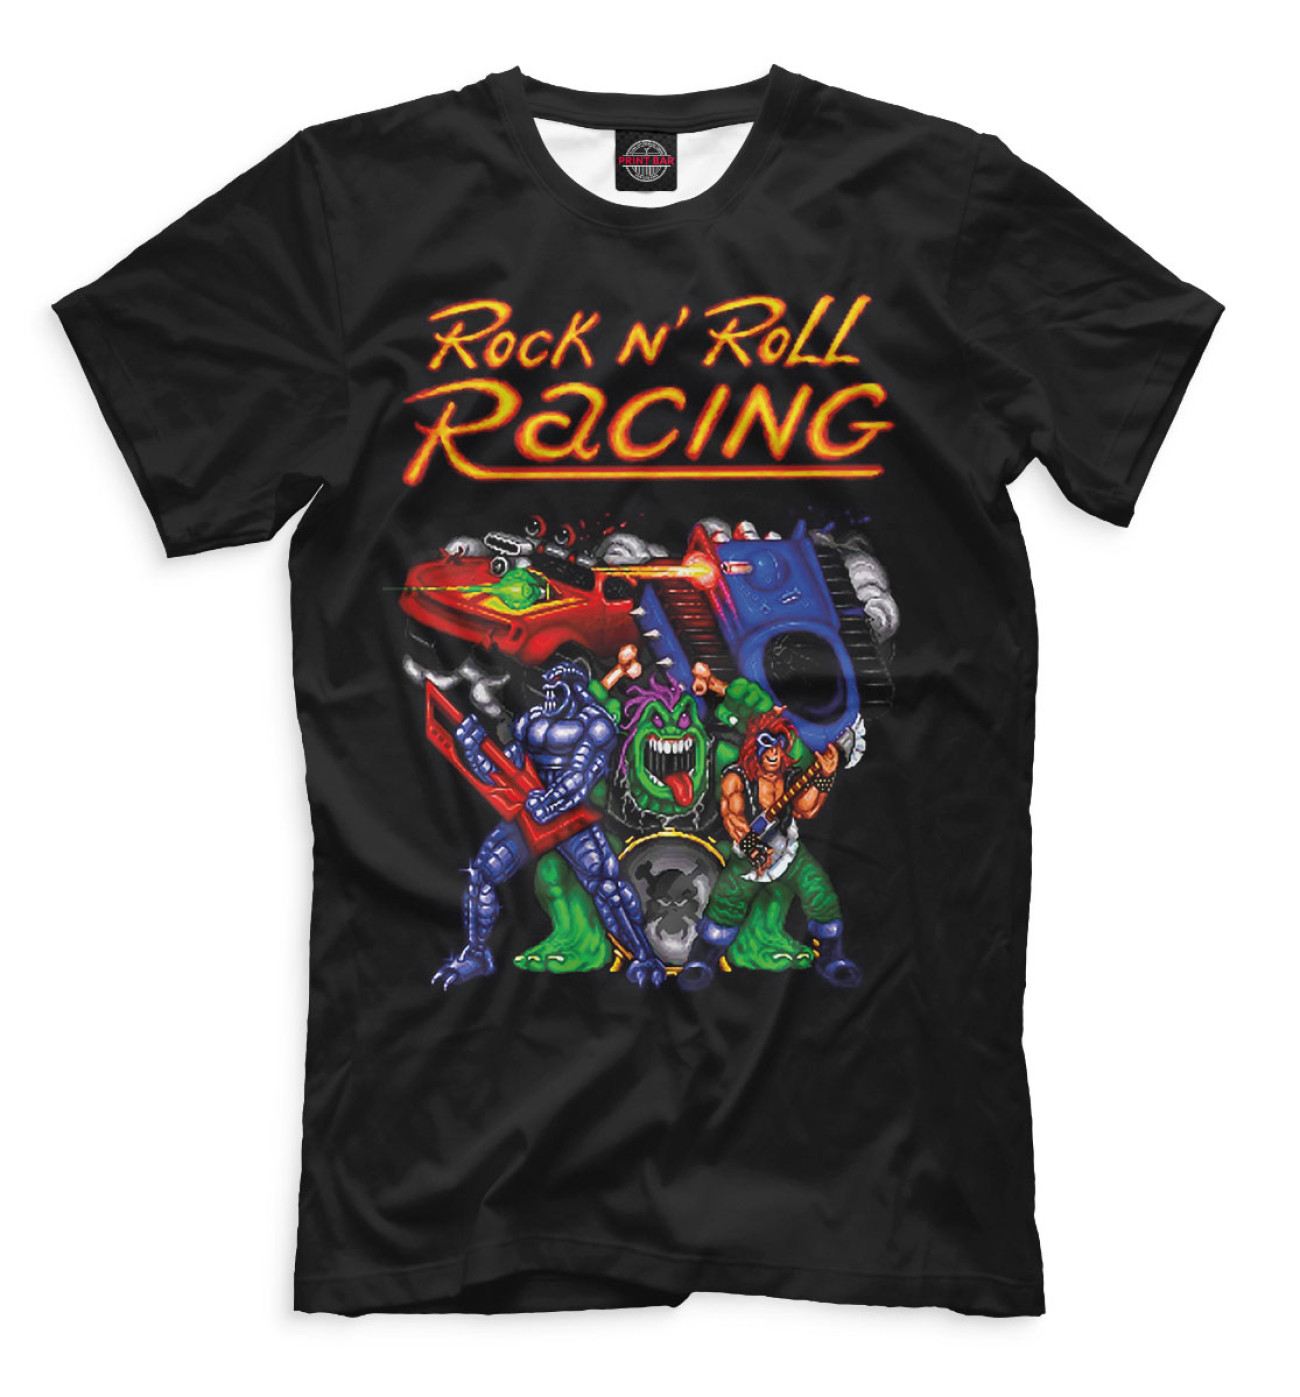 Мужская Футболка Rock n’ Roll Racing, артикул: RNR-165178-fut-2